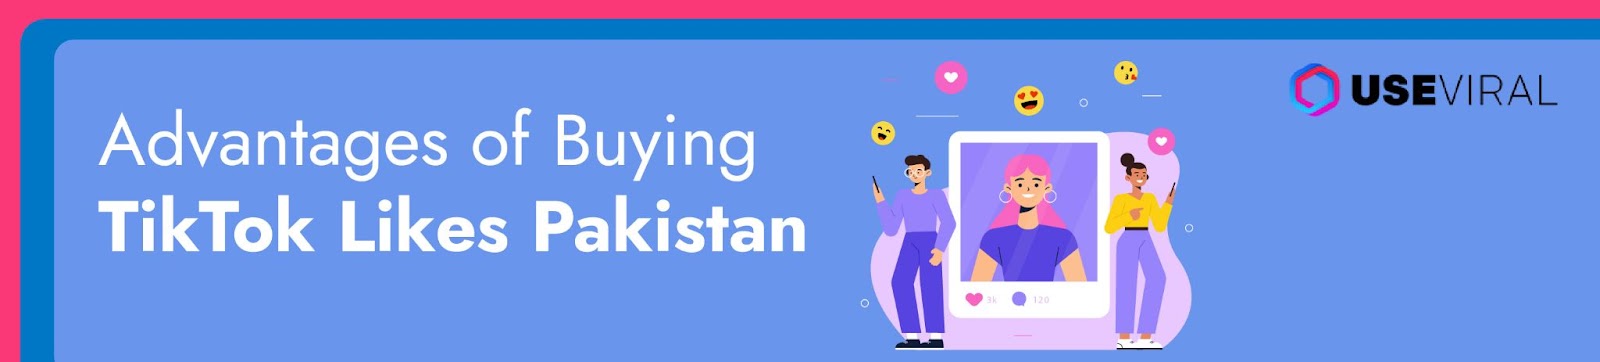 Advantages of Buying TikTok Likes Pakistan